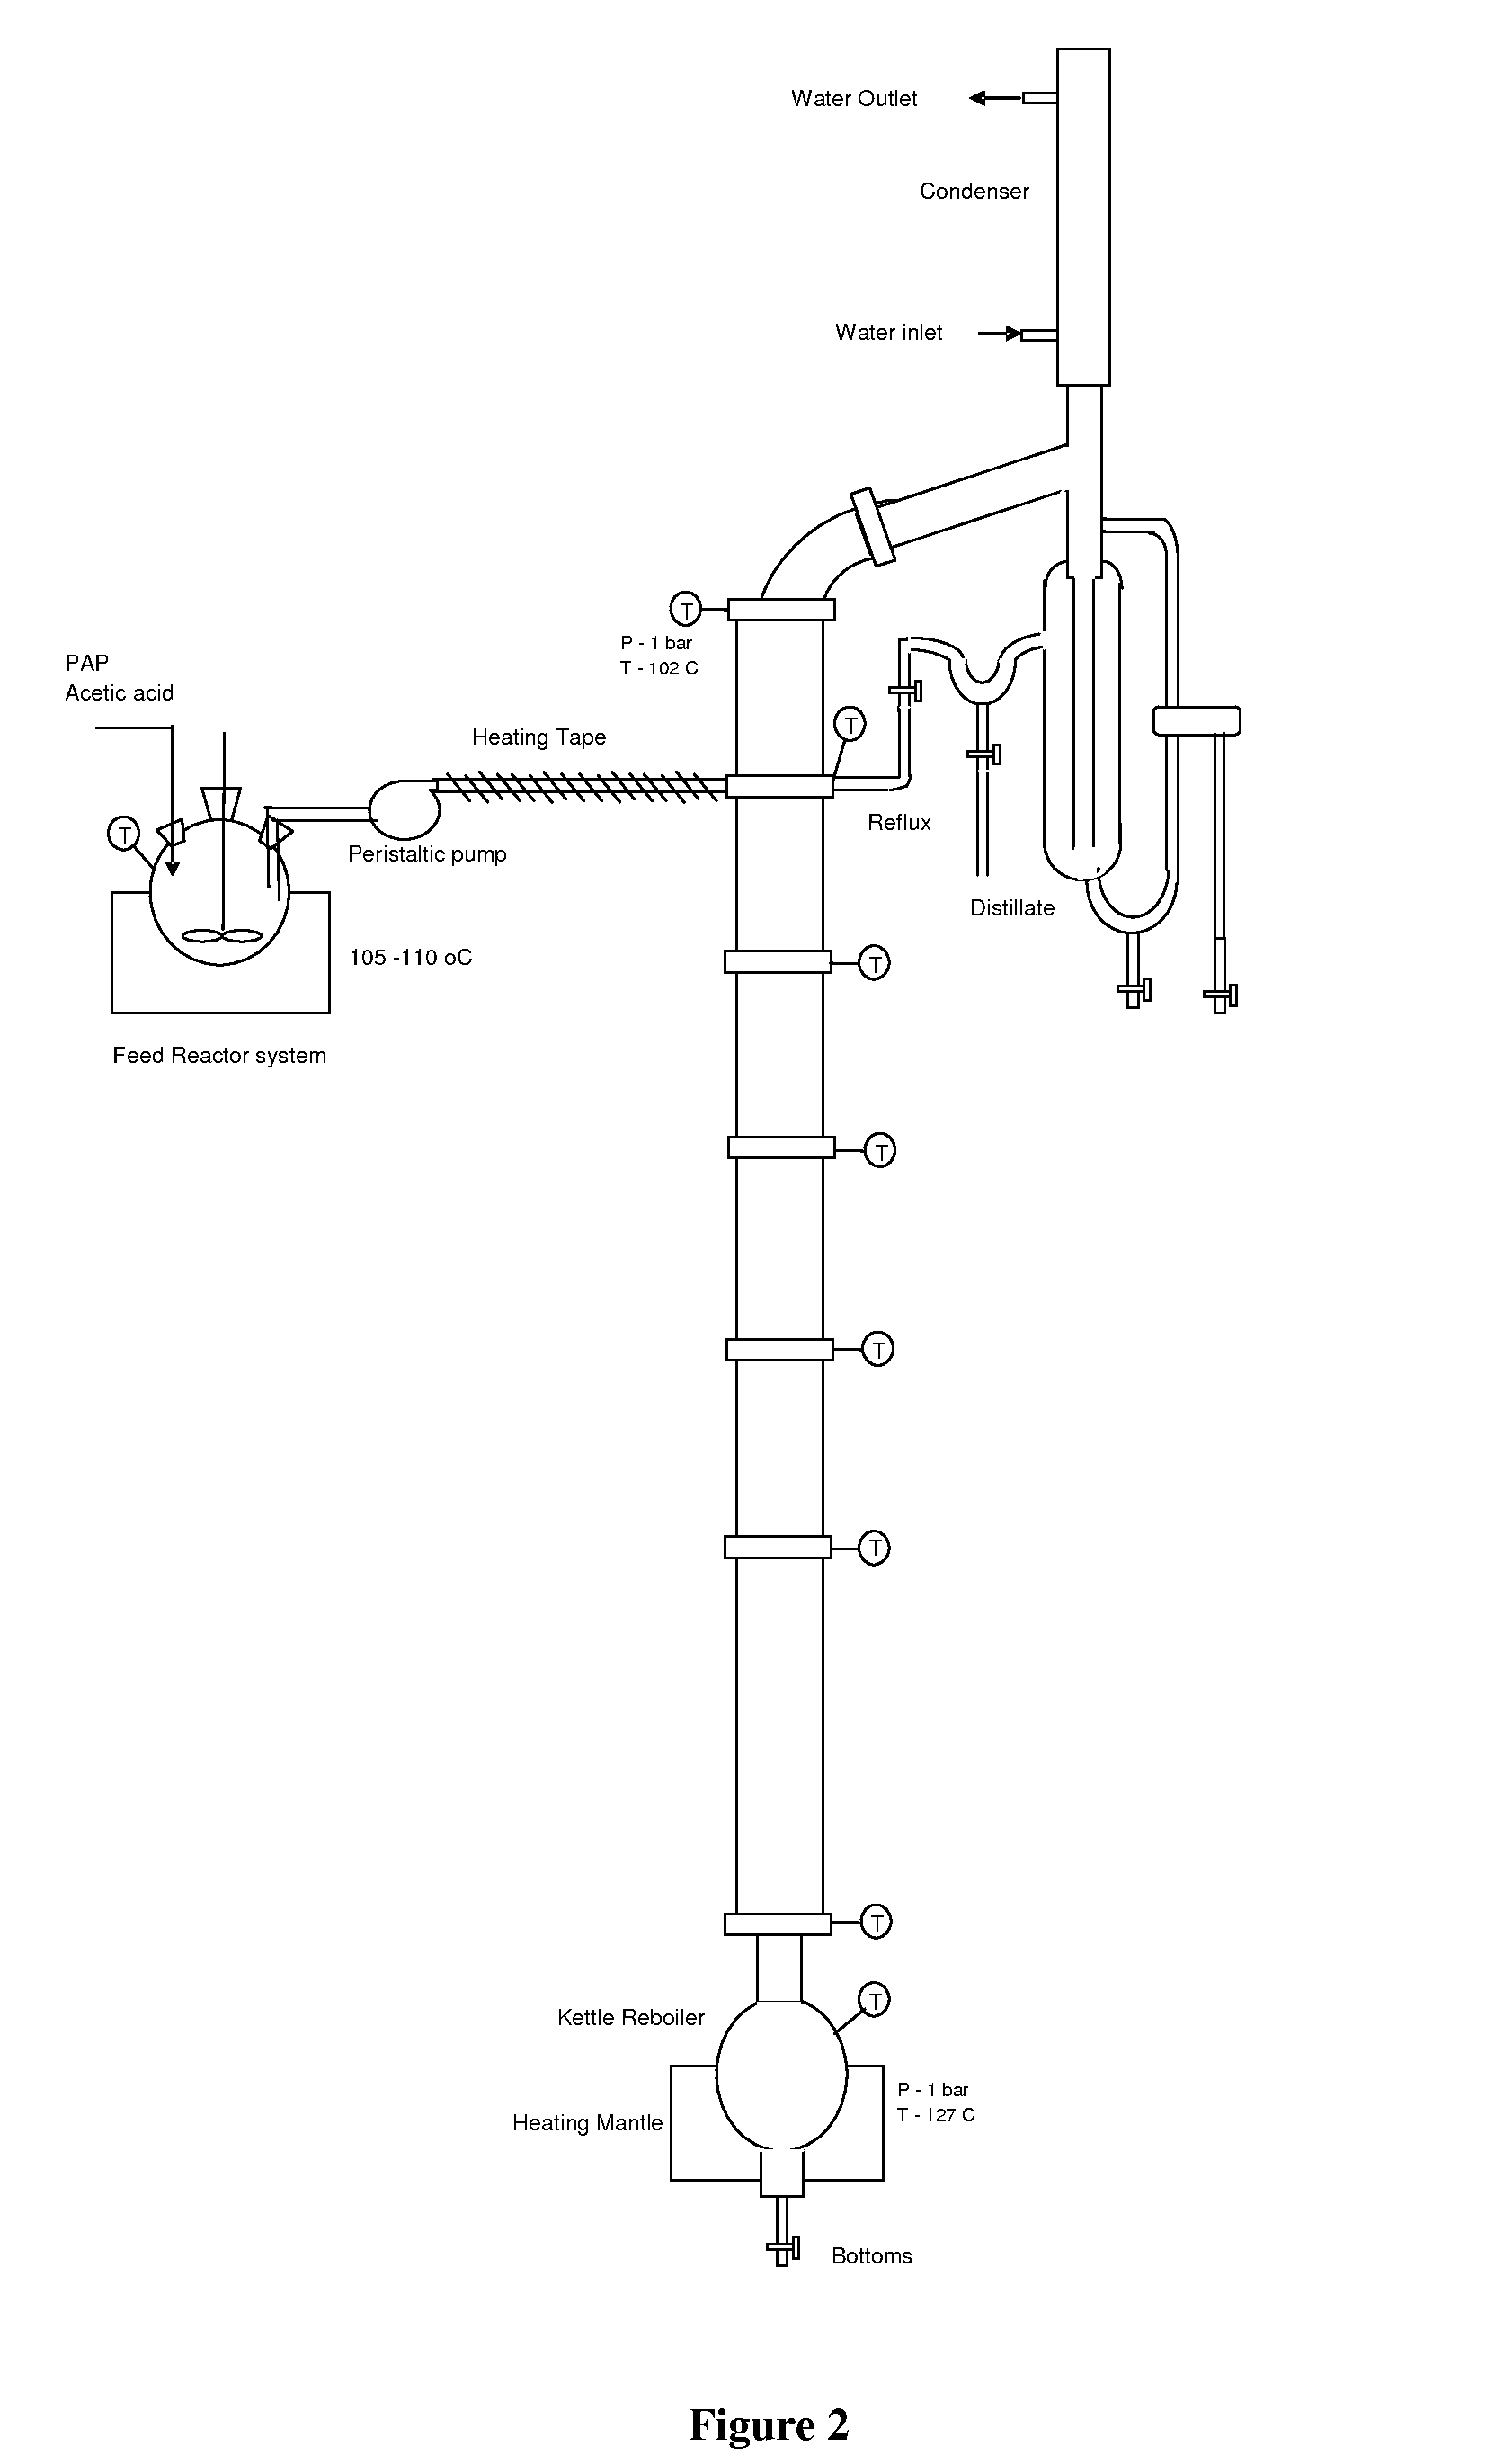 Reactive distillation process for preparation of acetaminophen